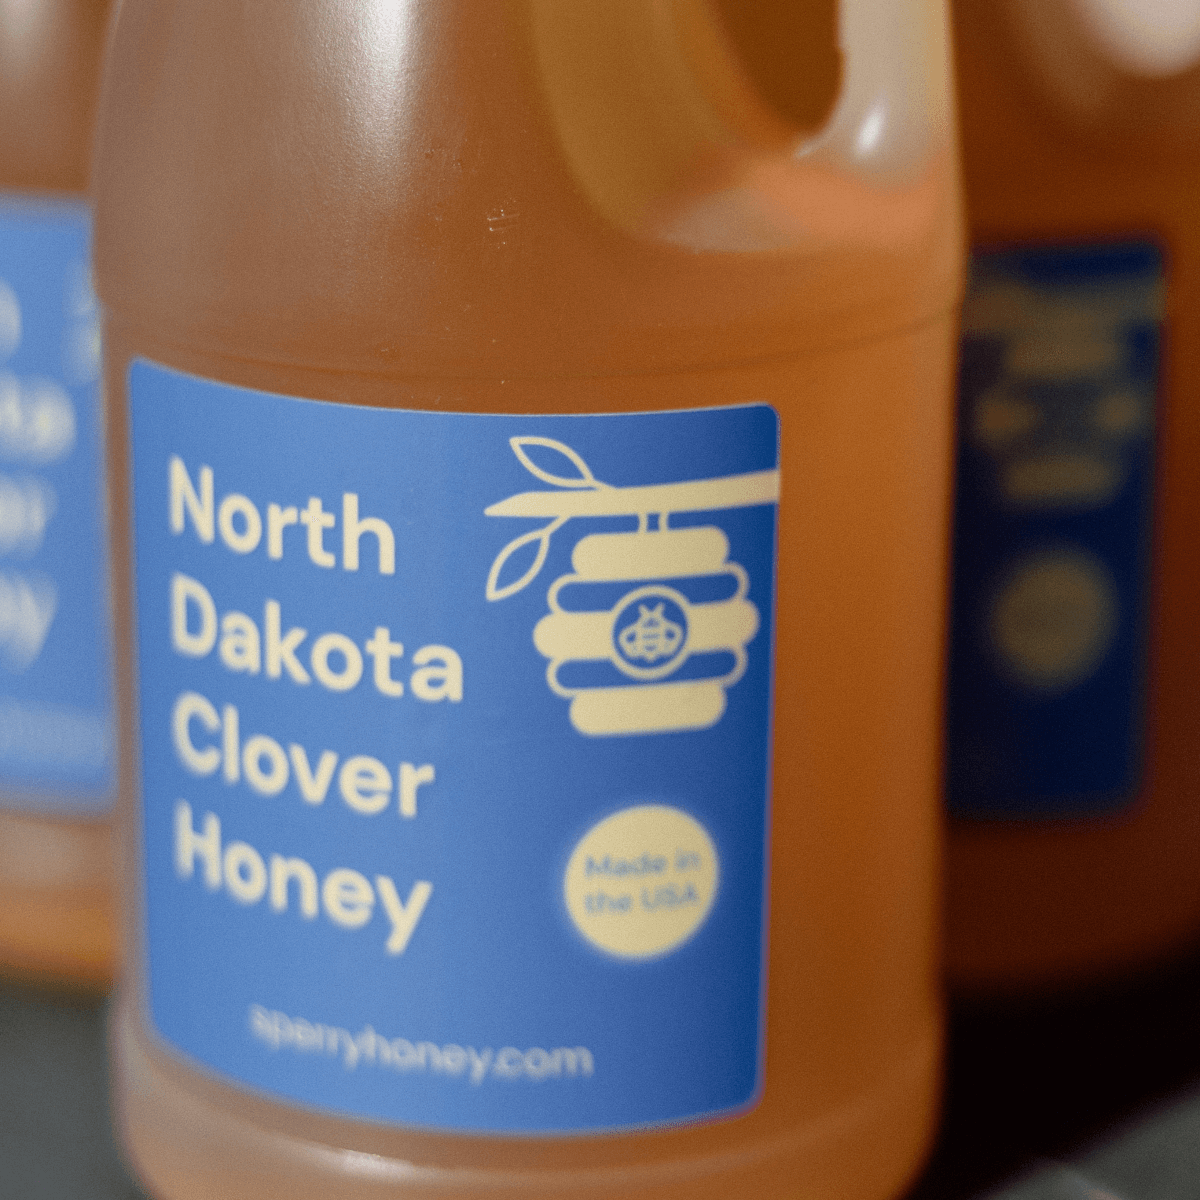 A closeup photo of three bottles of clover honey.